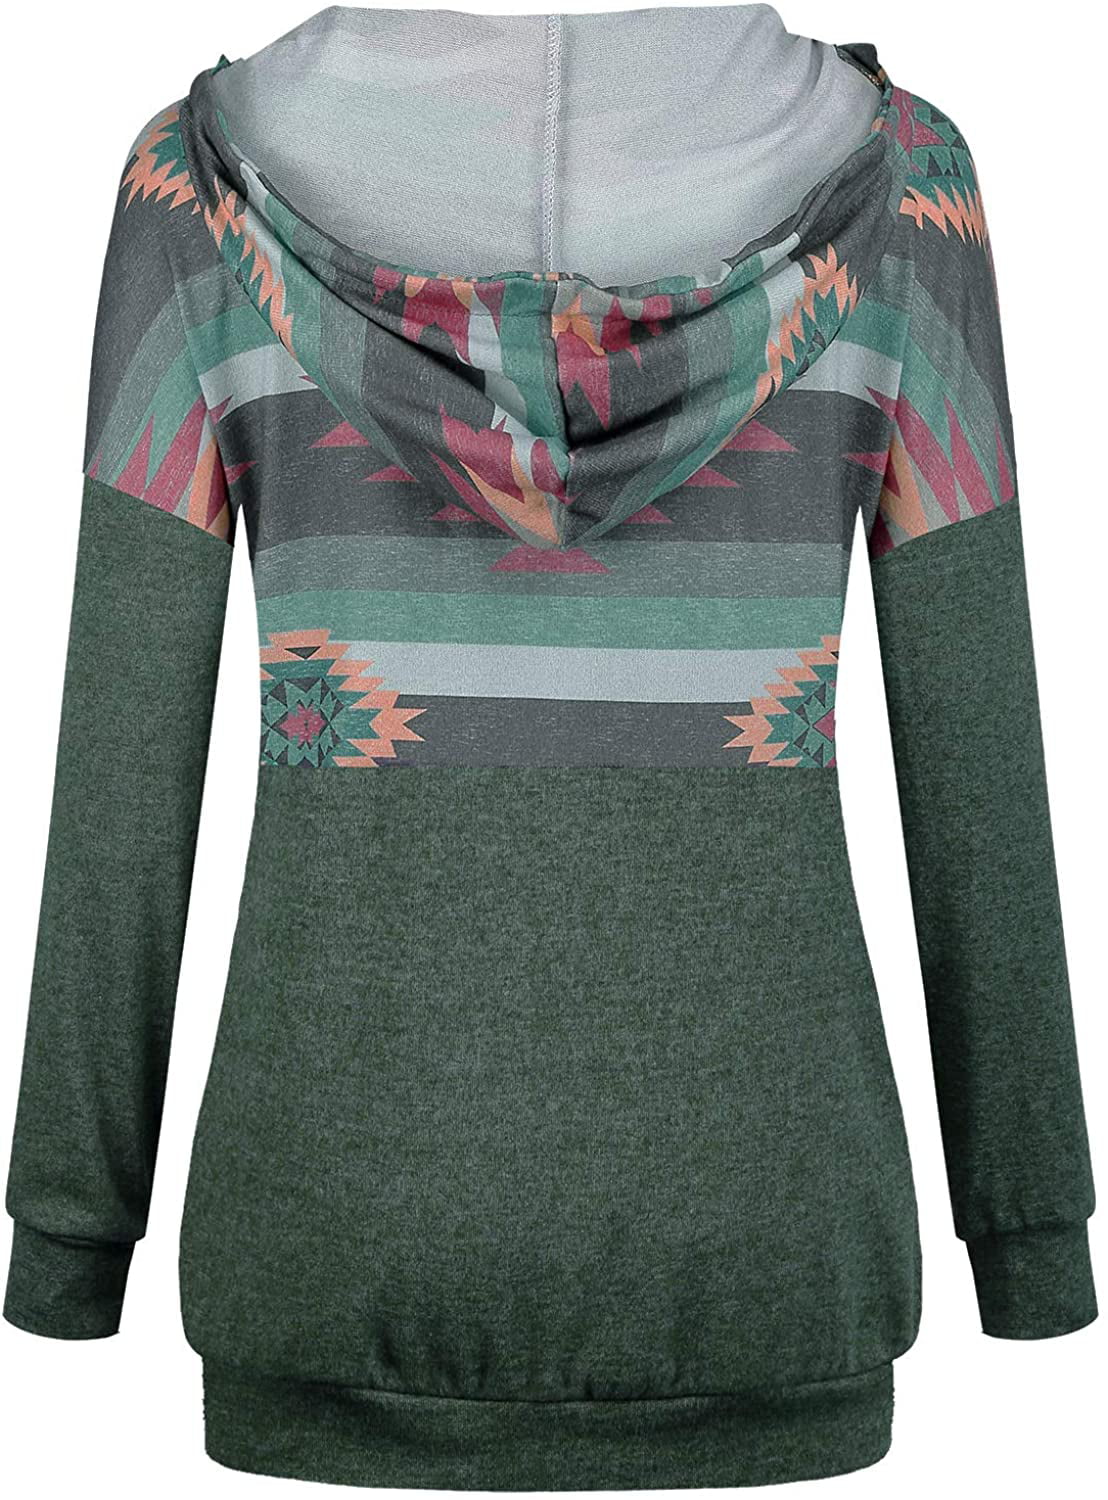 Blevonh Women 1/4 Zipper Hoodies Color Block Print Pocket Pullover Sweatshirt 